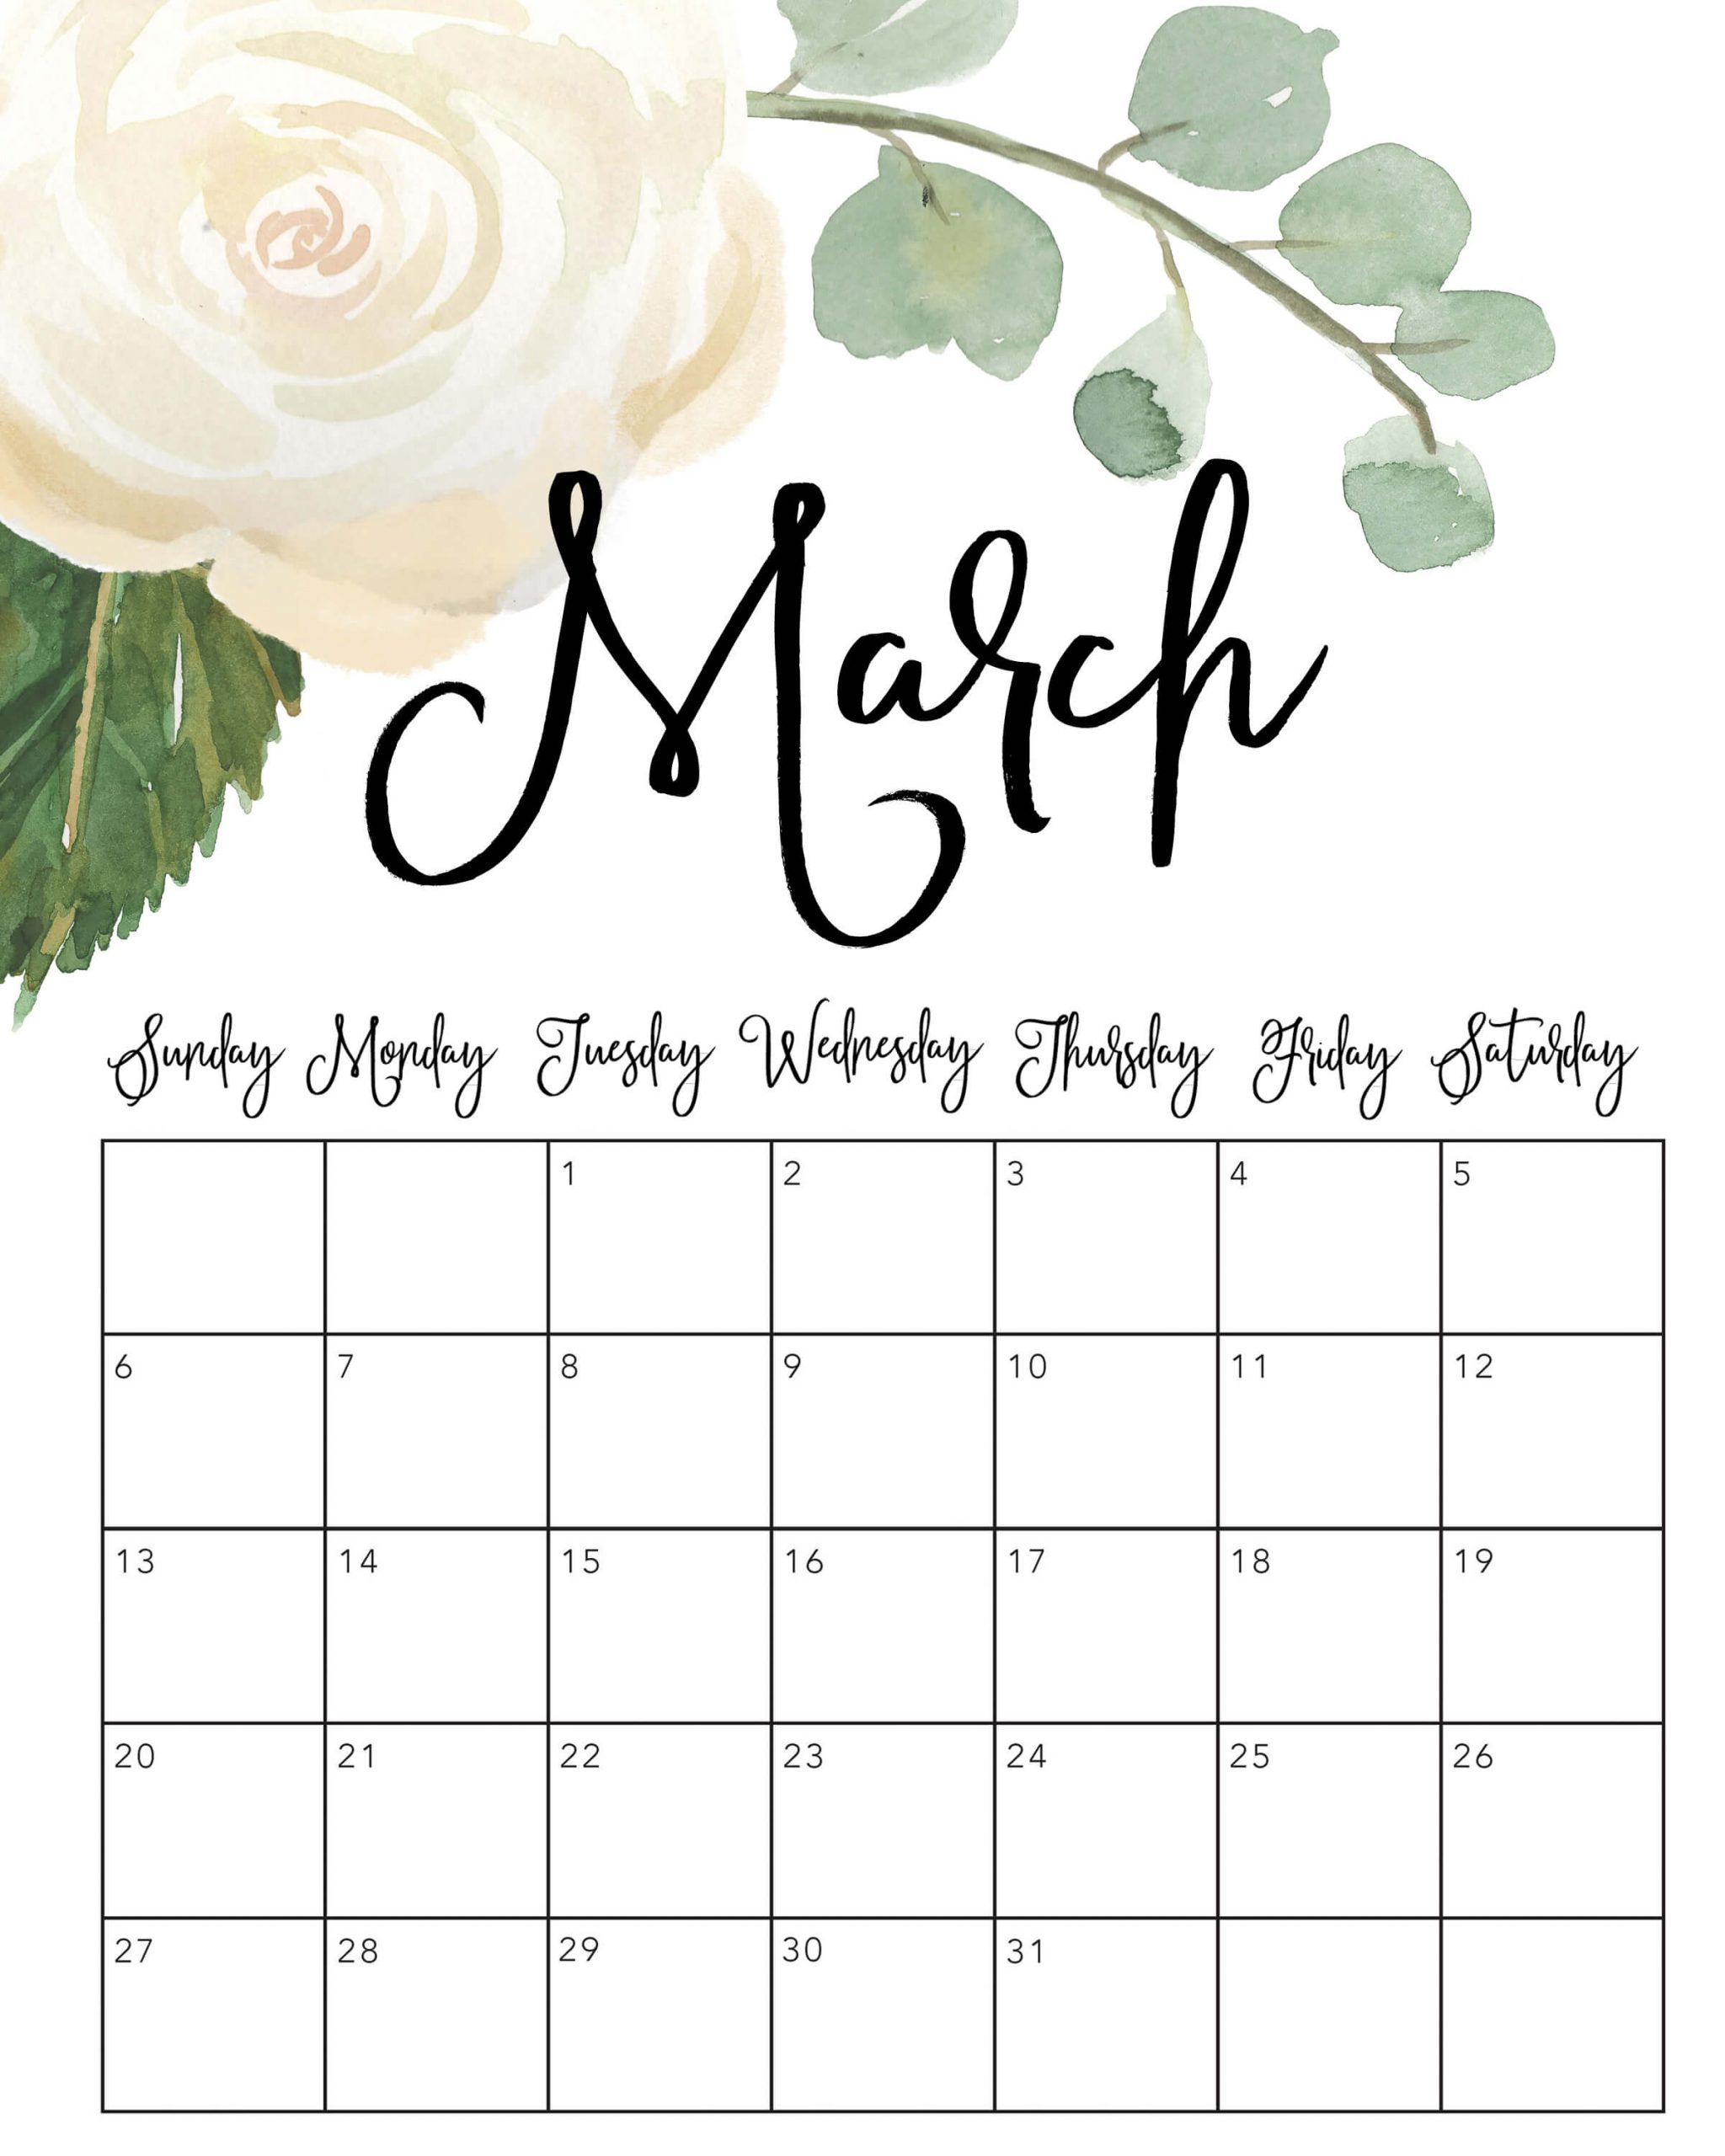 Cute March 2022 Calendar Printable - Floral Designs